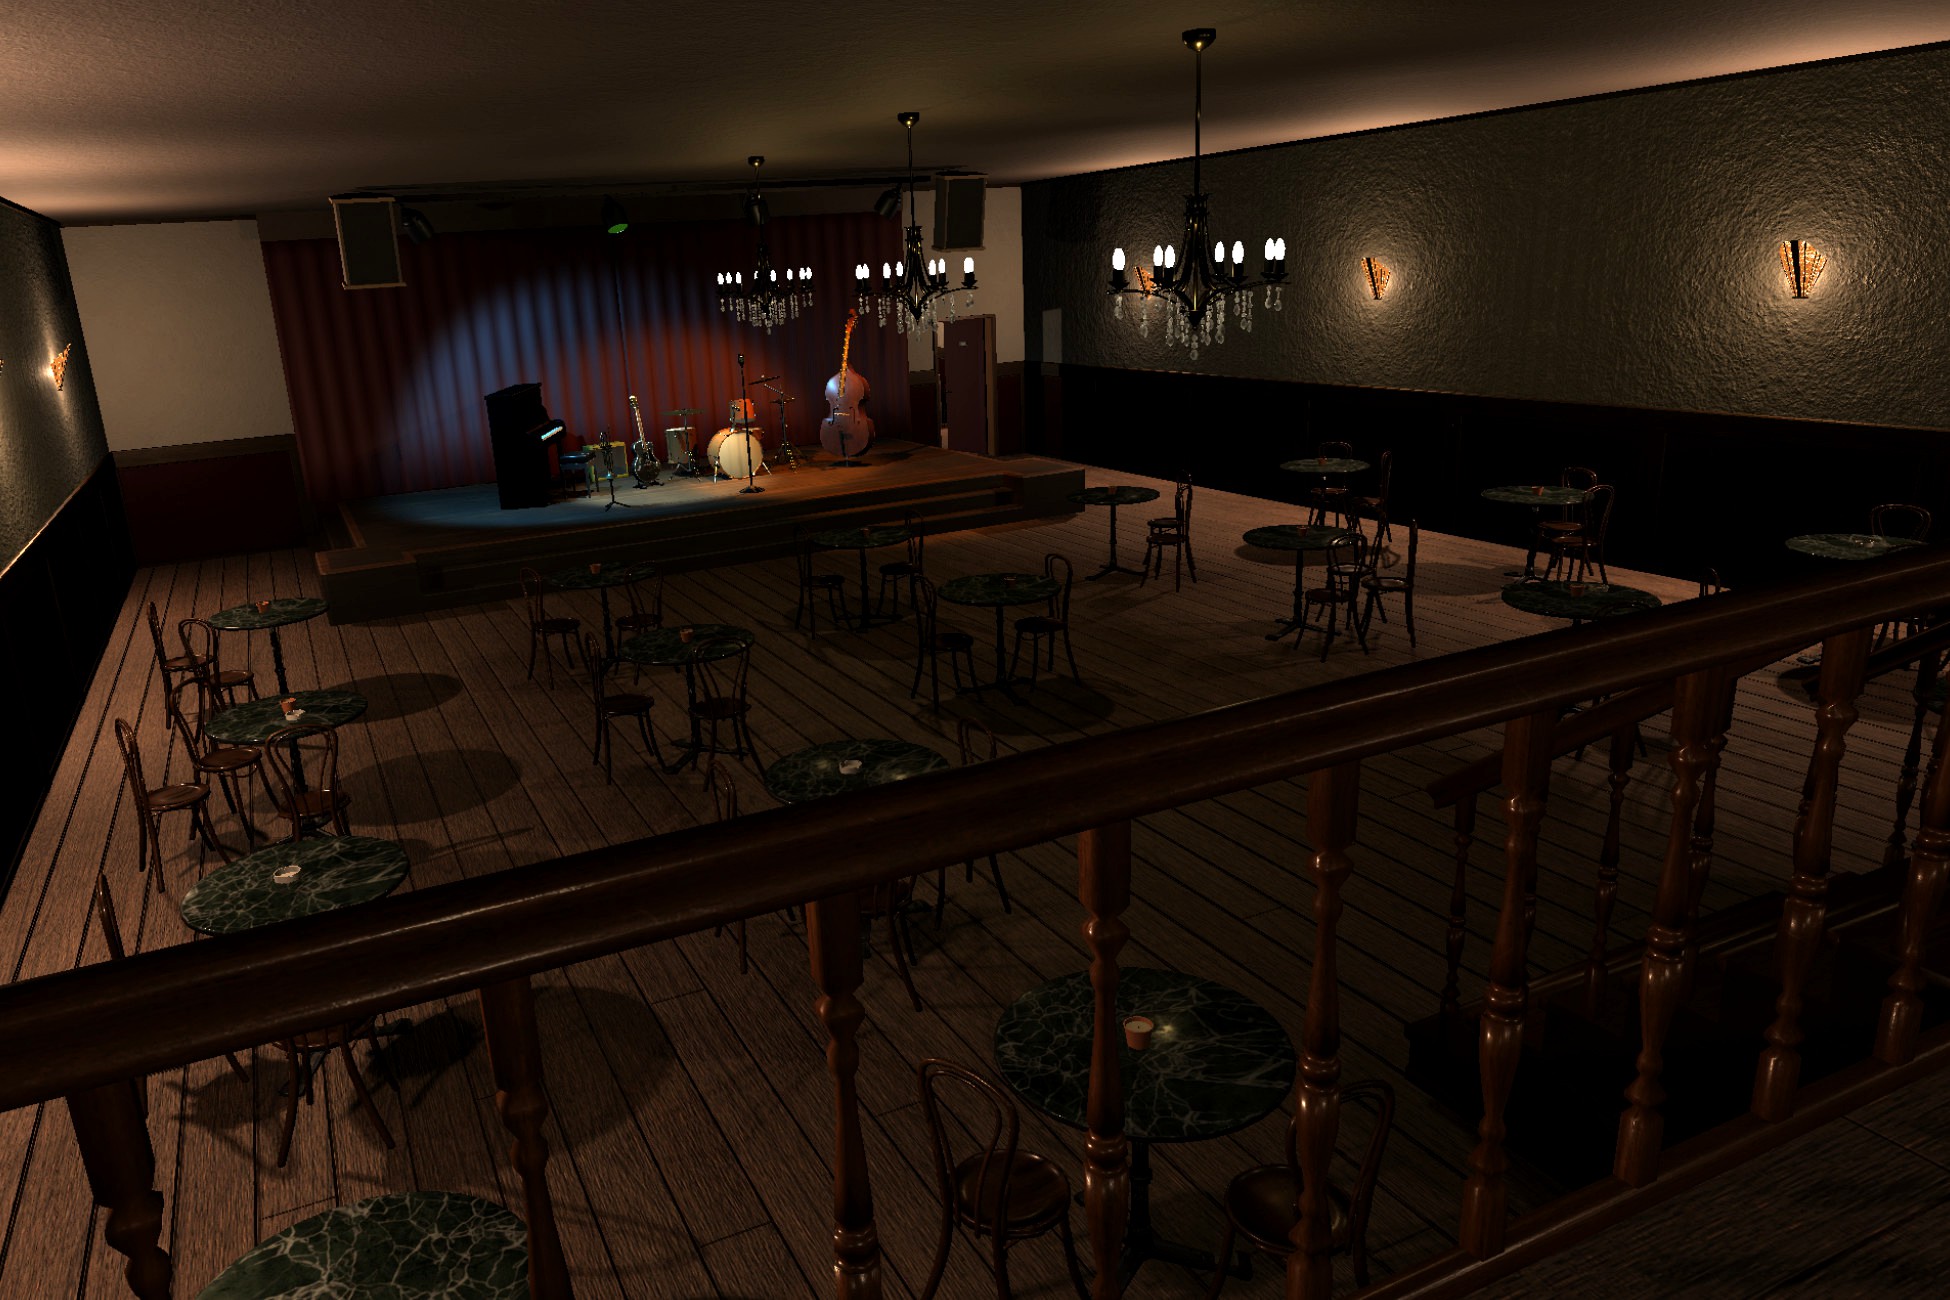 Jazzclub / music bar / cafe